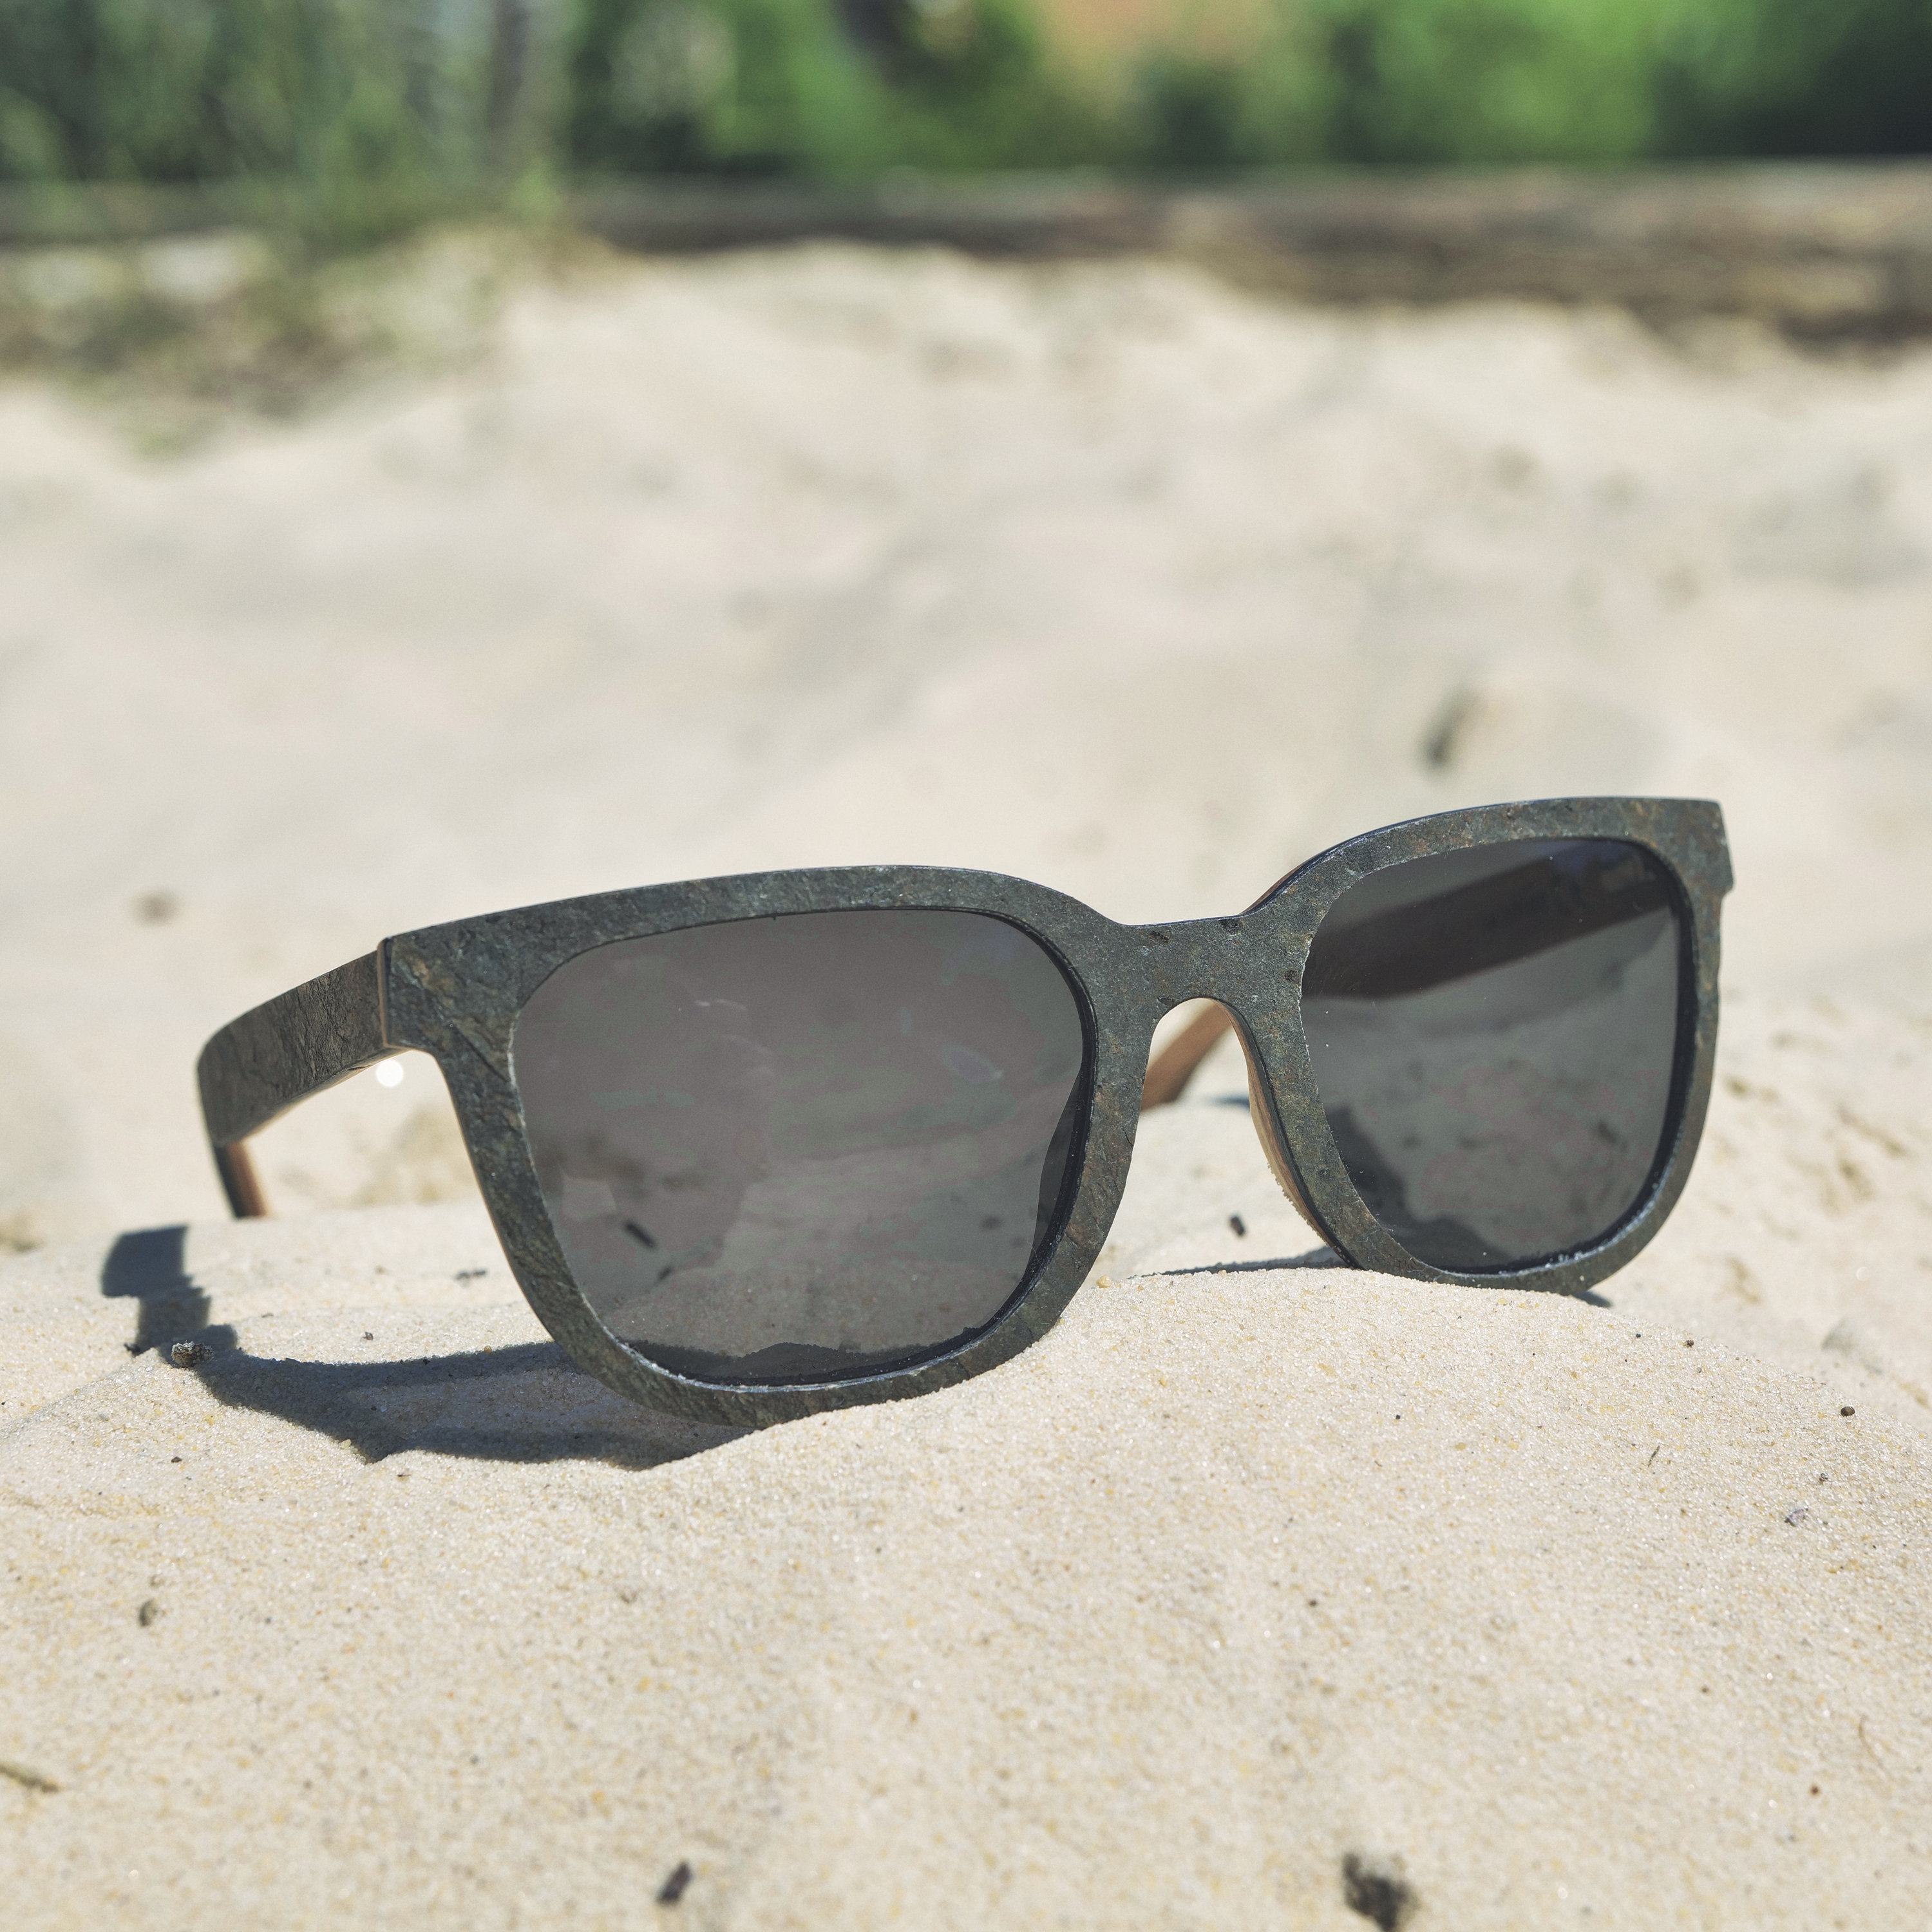 Driskills Sunglasses Stone & Bamboo Frame - Grey Lens